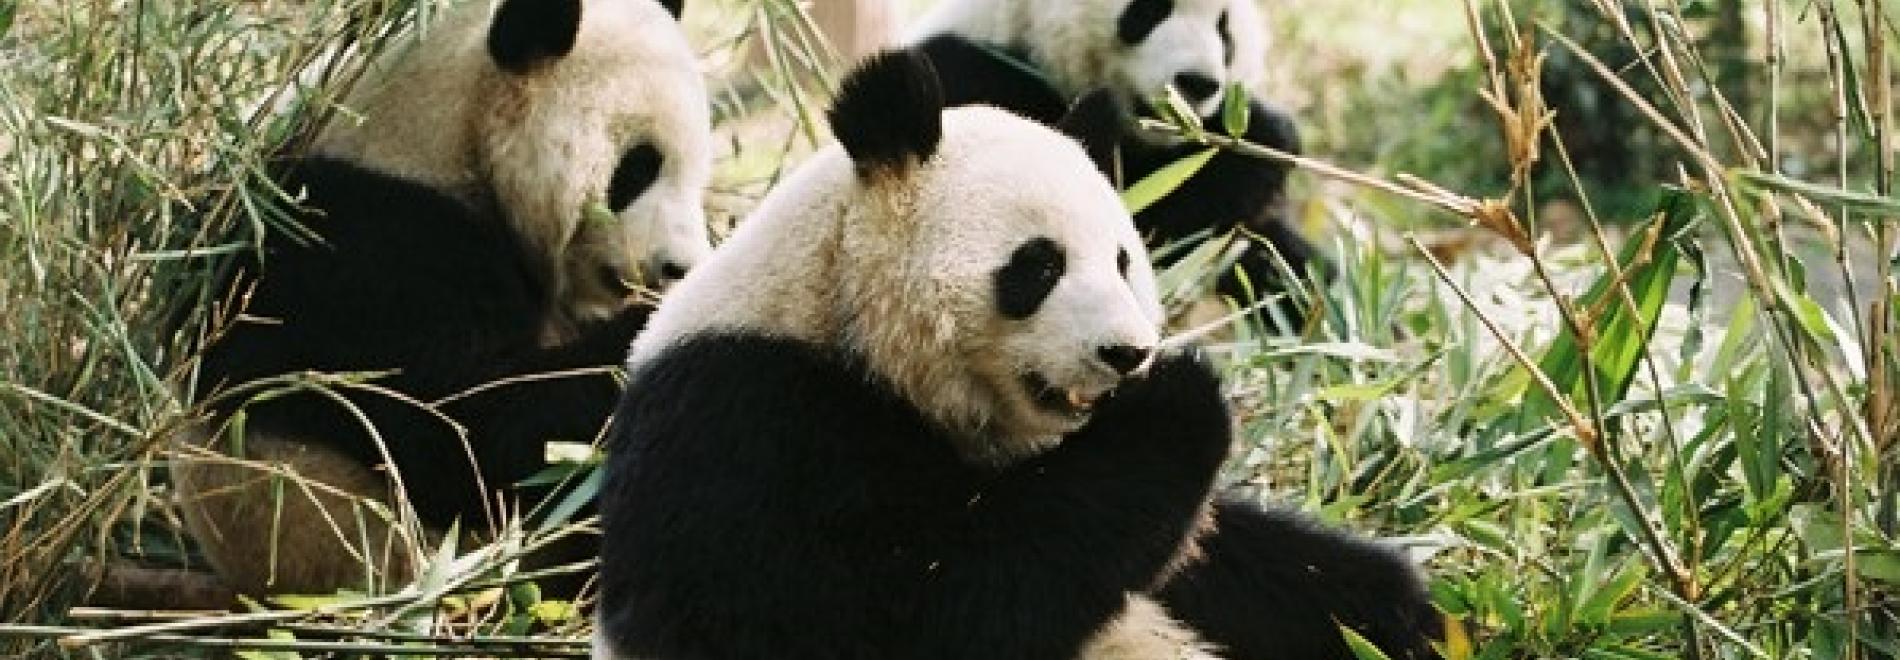 Giant Pandas, China